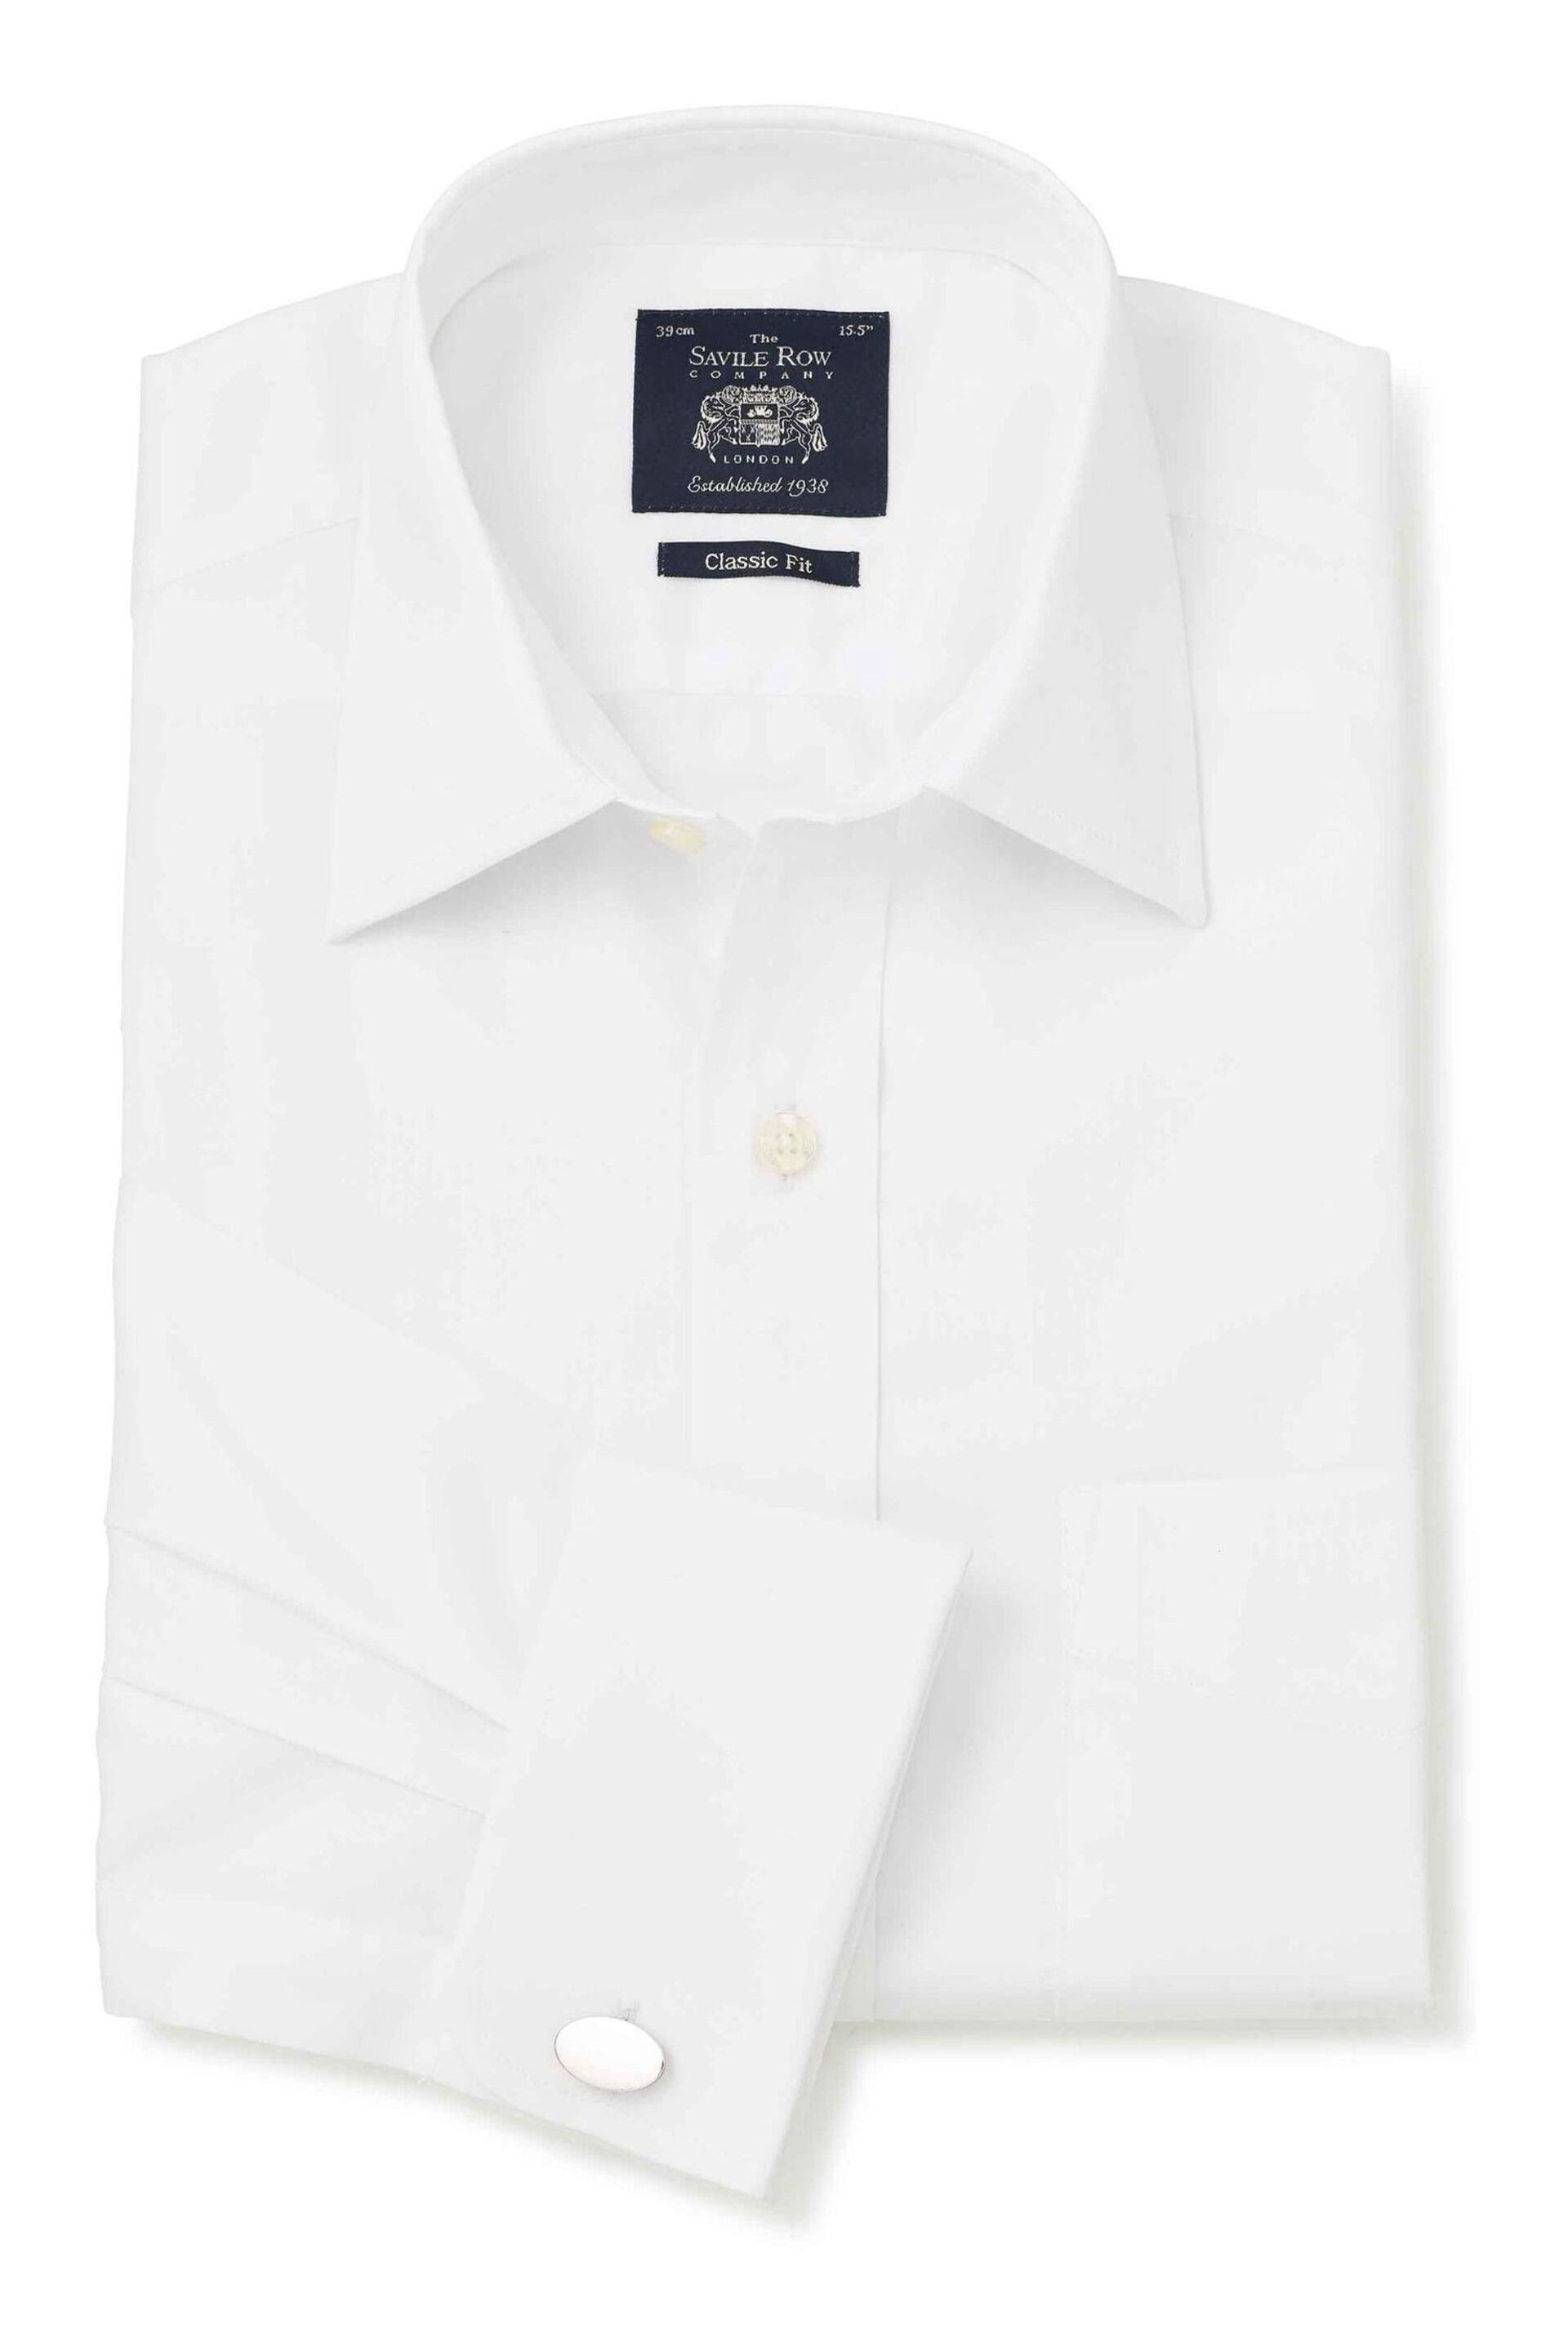 Savile Row Co White Twill Classic Fit Single Cuff Shirt - Image 2 of 6